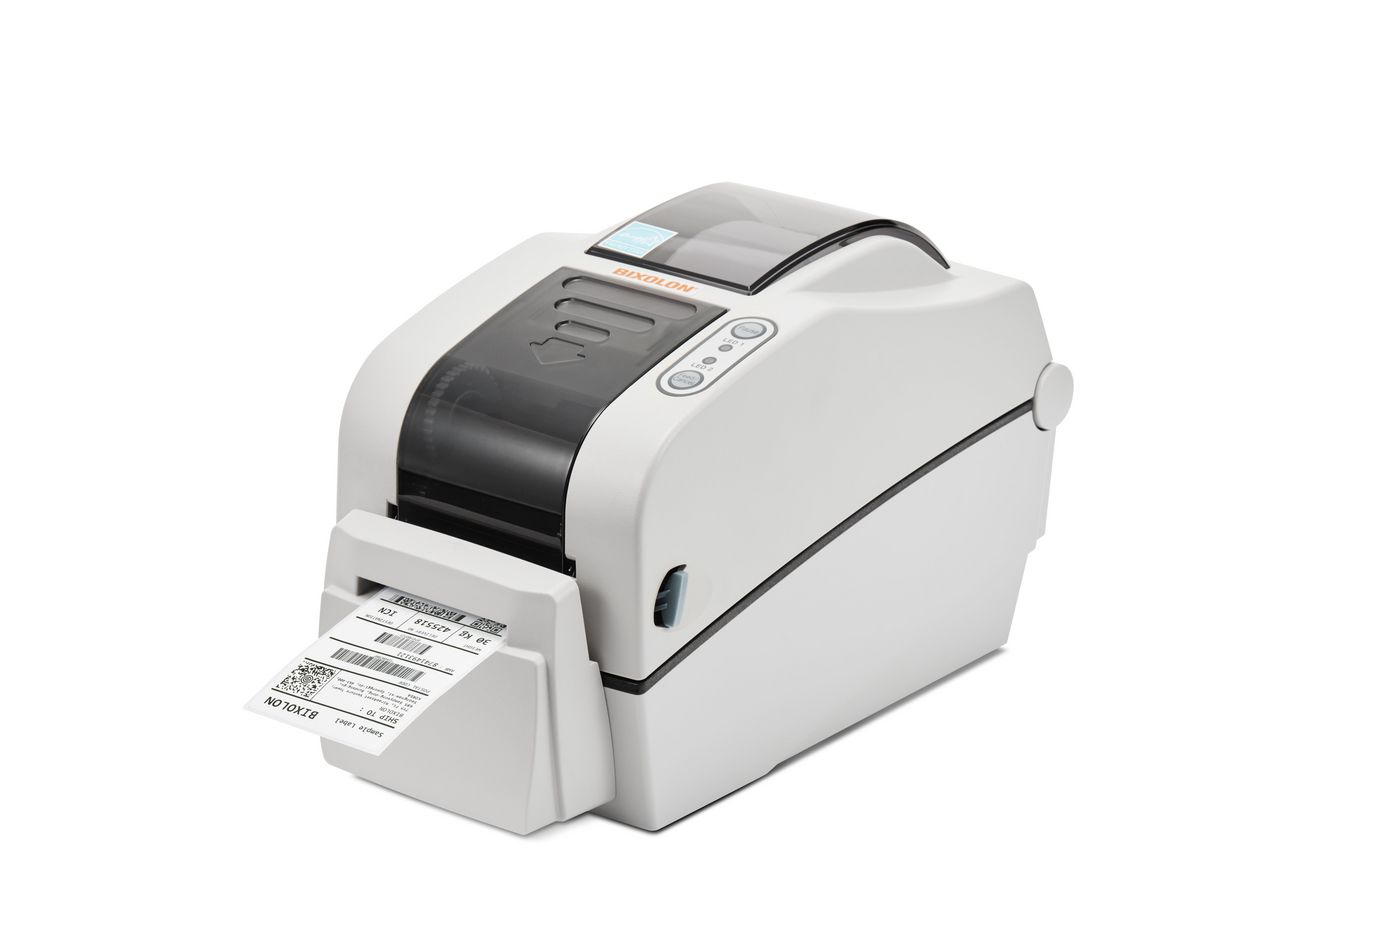 Slp-tx220c -  Label Printer - Direct Thermal - USB / Parallel